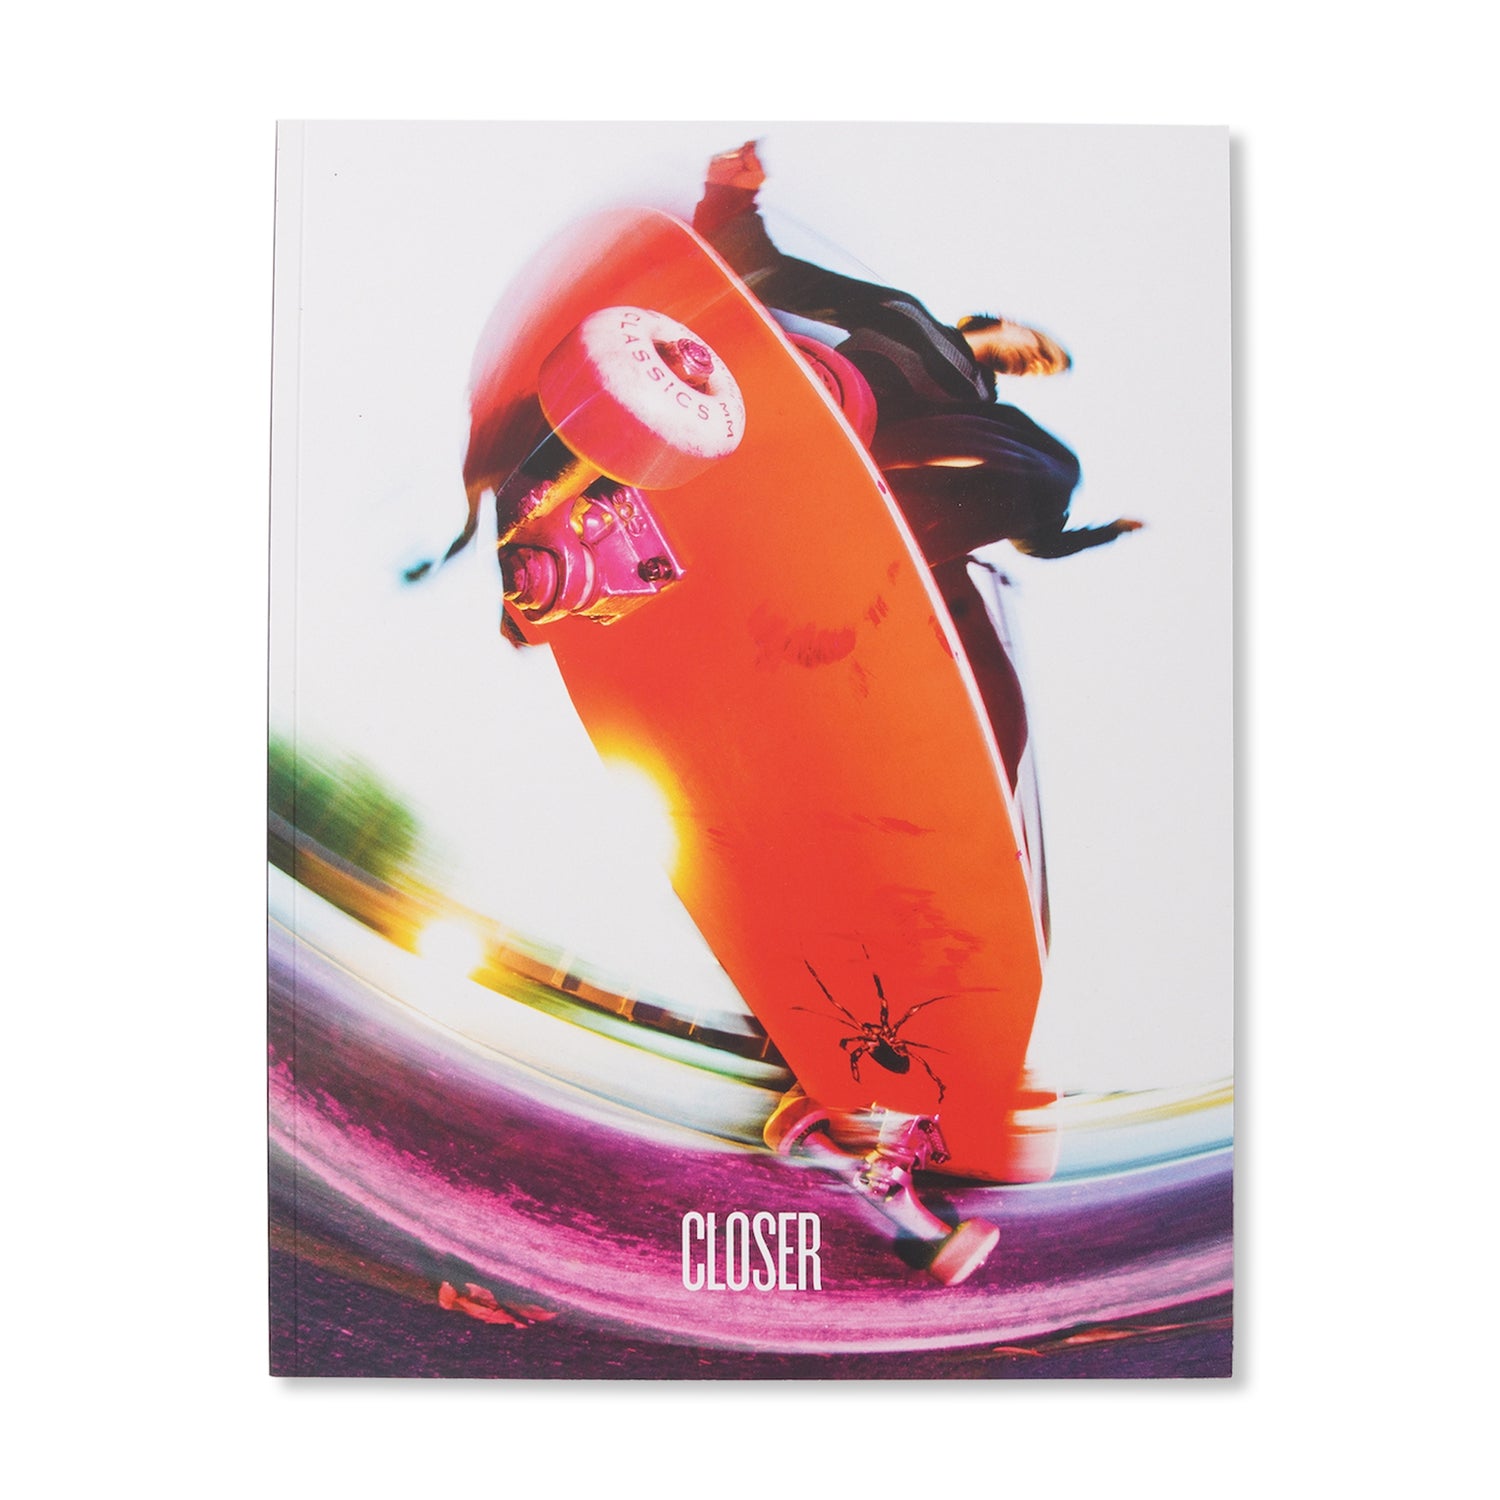 Closer Skate Magazine - Volume 1 Issue 2